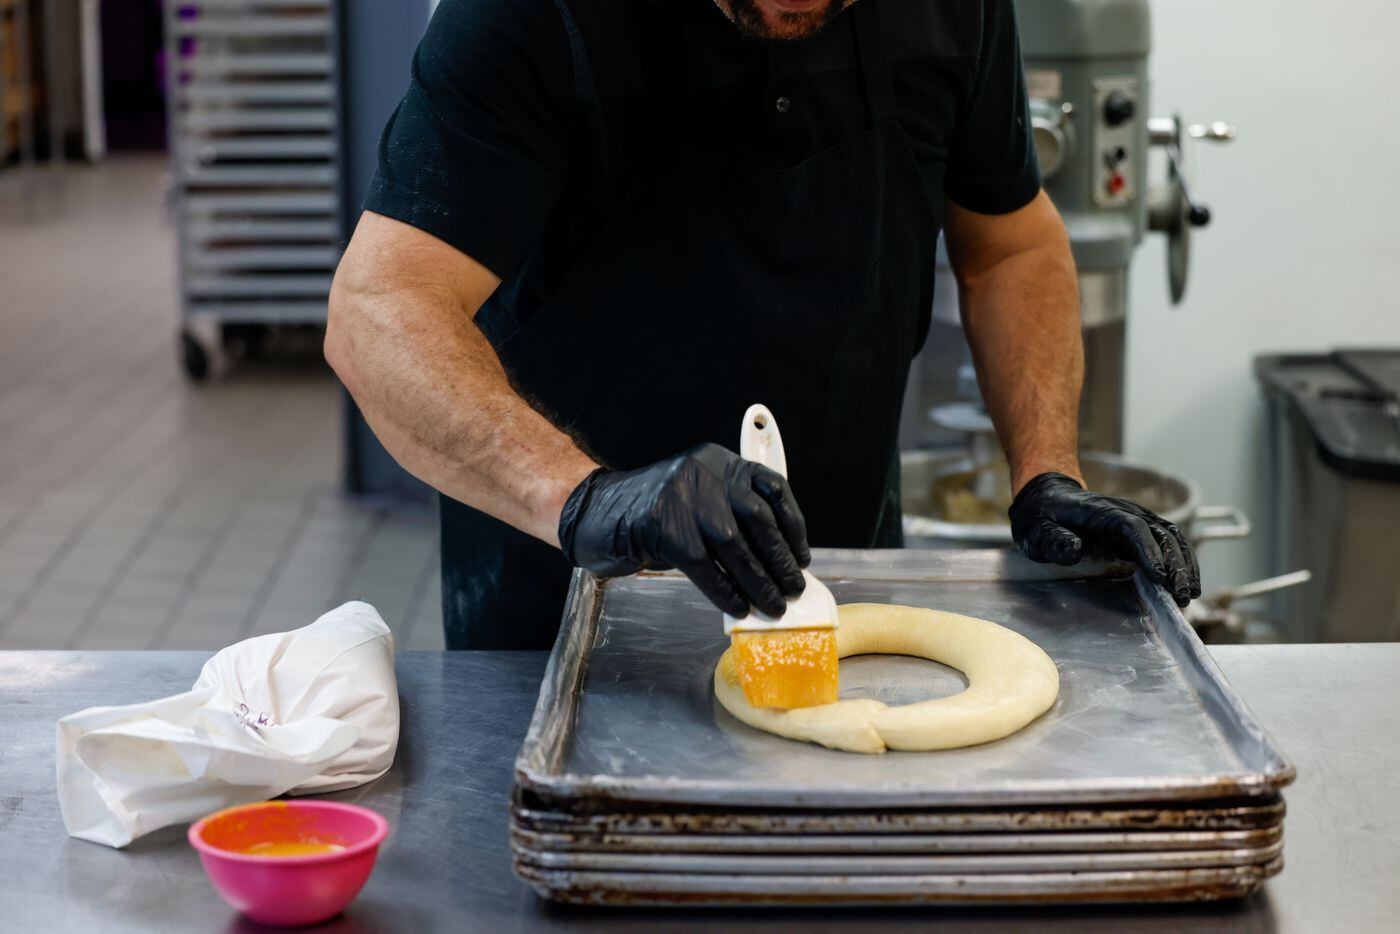 Baker Isaac Ramirez prepares Rosca de Reyes at the Tango Bakery in Garland on Thursday, January 5th...